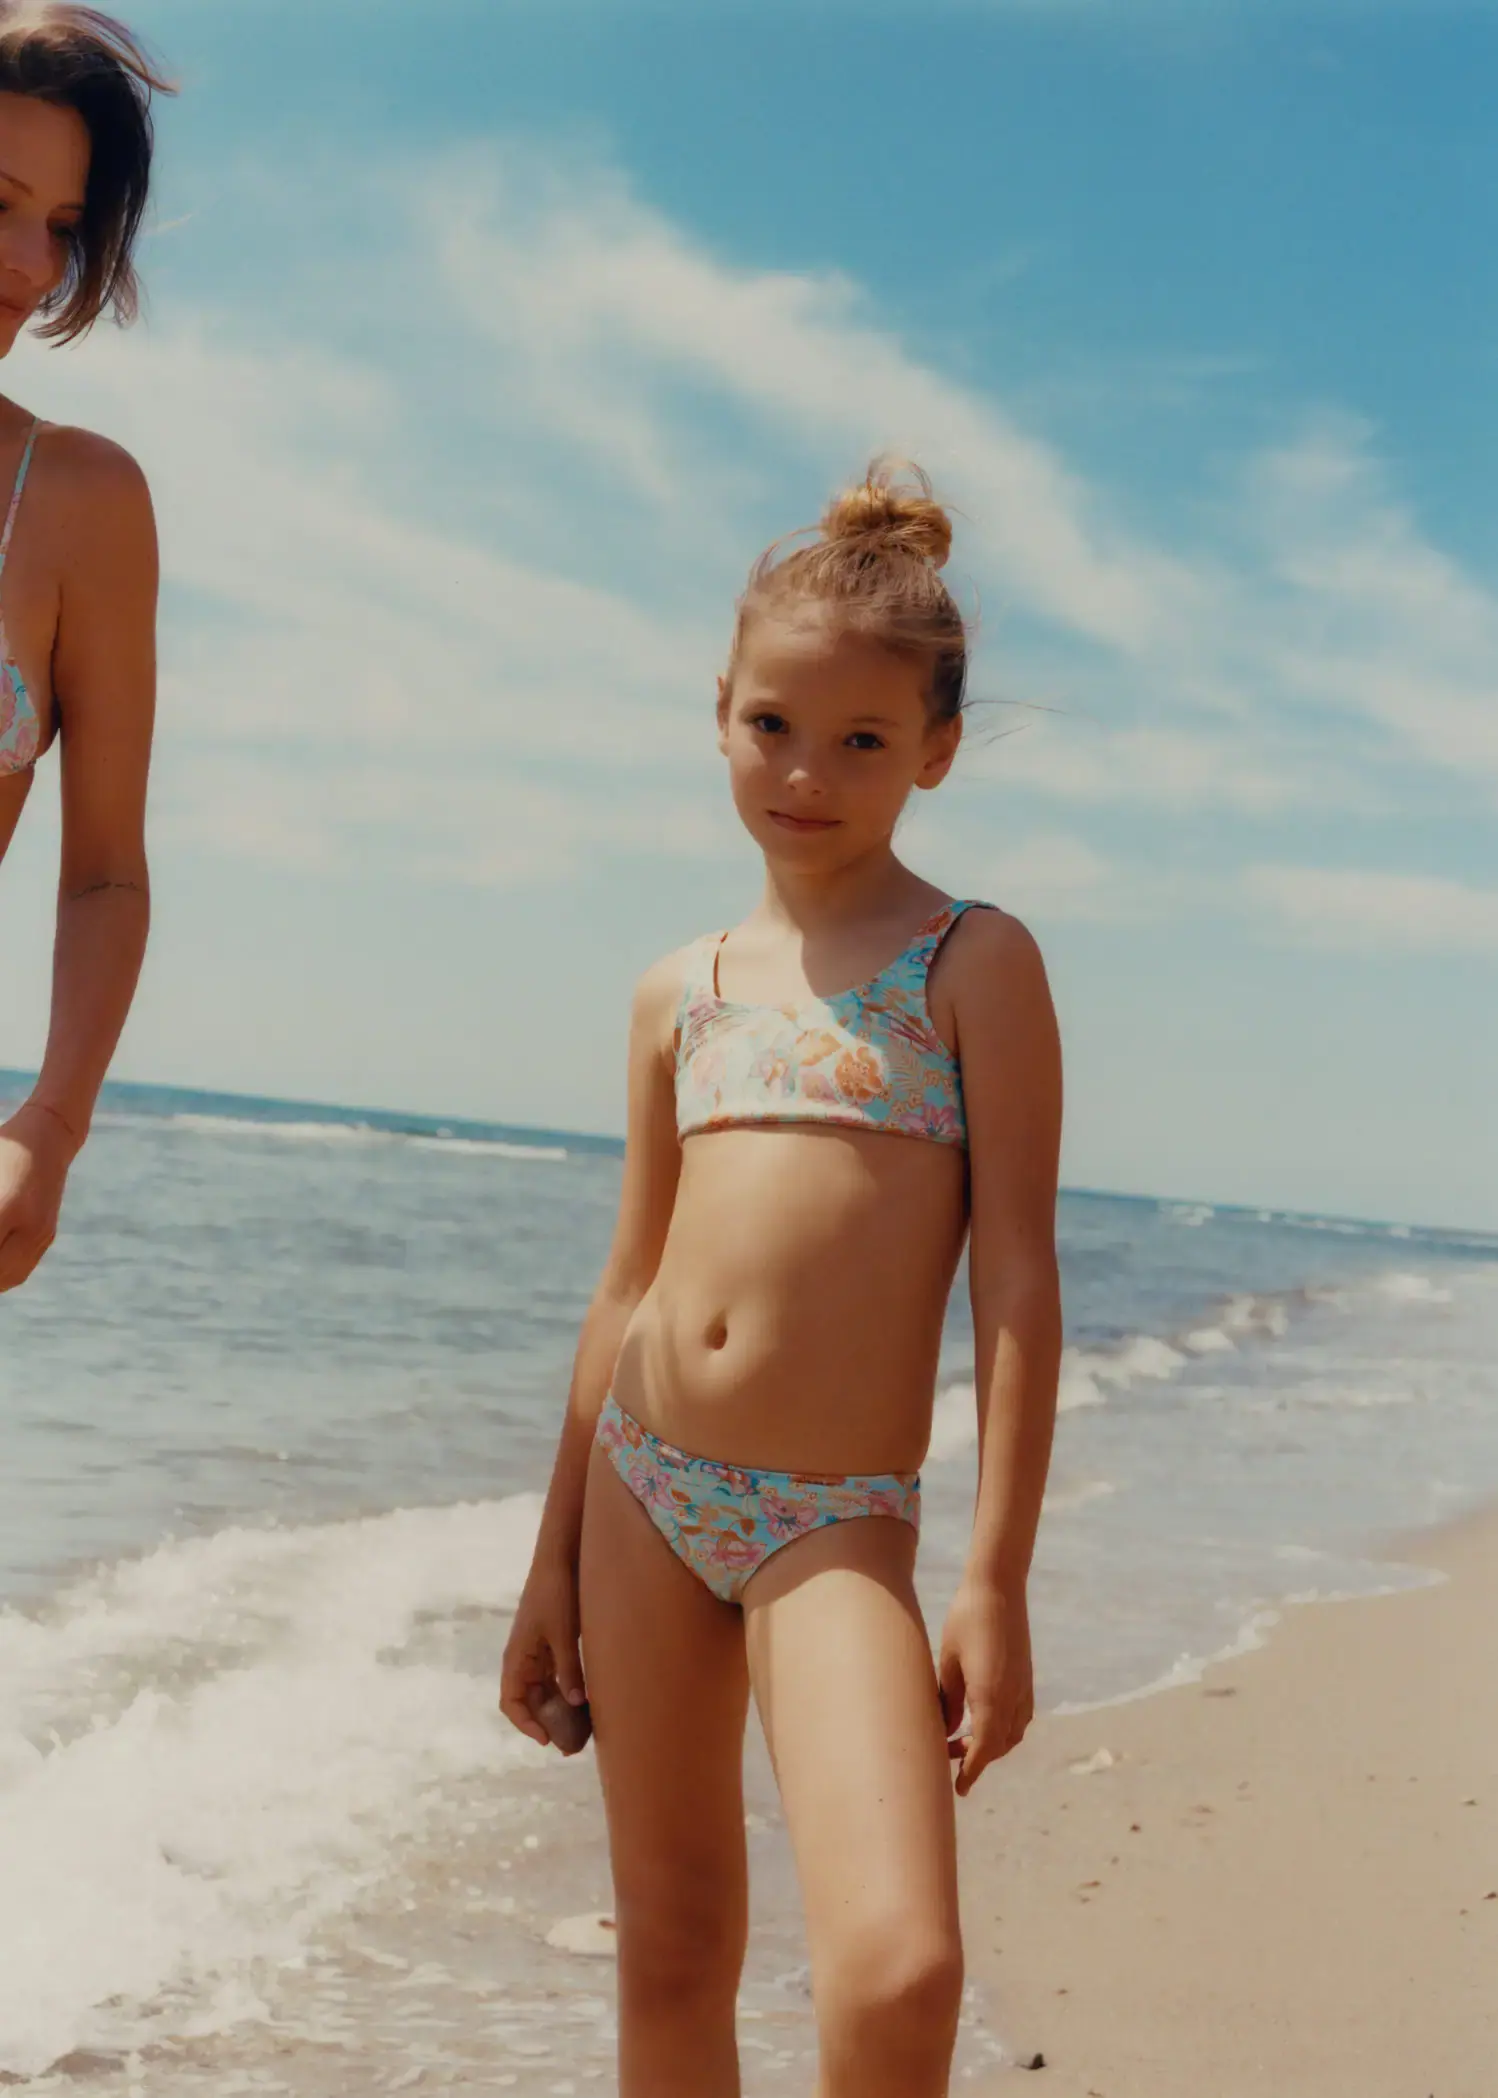 Mango Floral print bikini. a little girl standing on the beach next to the ocean. 